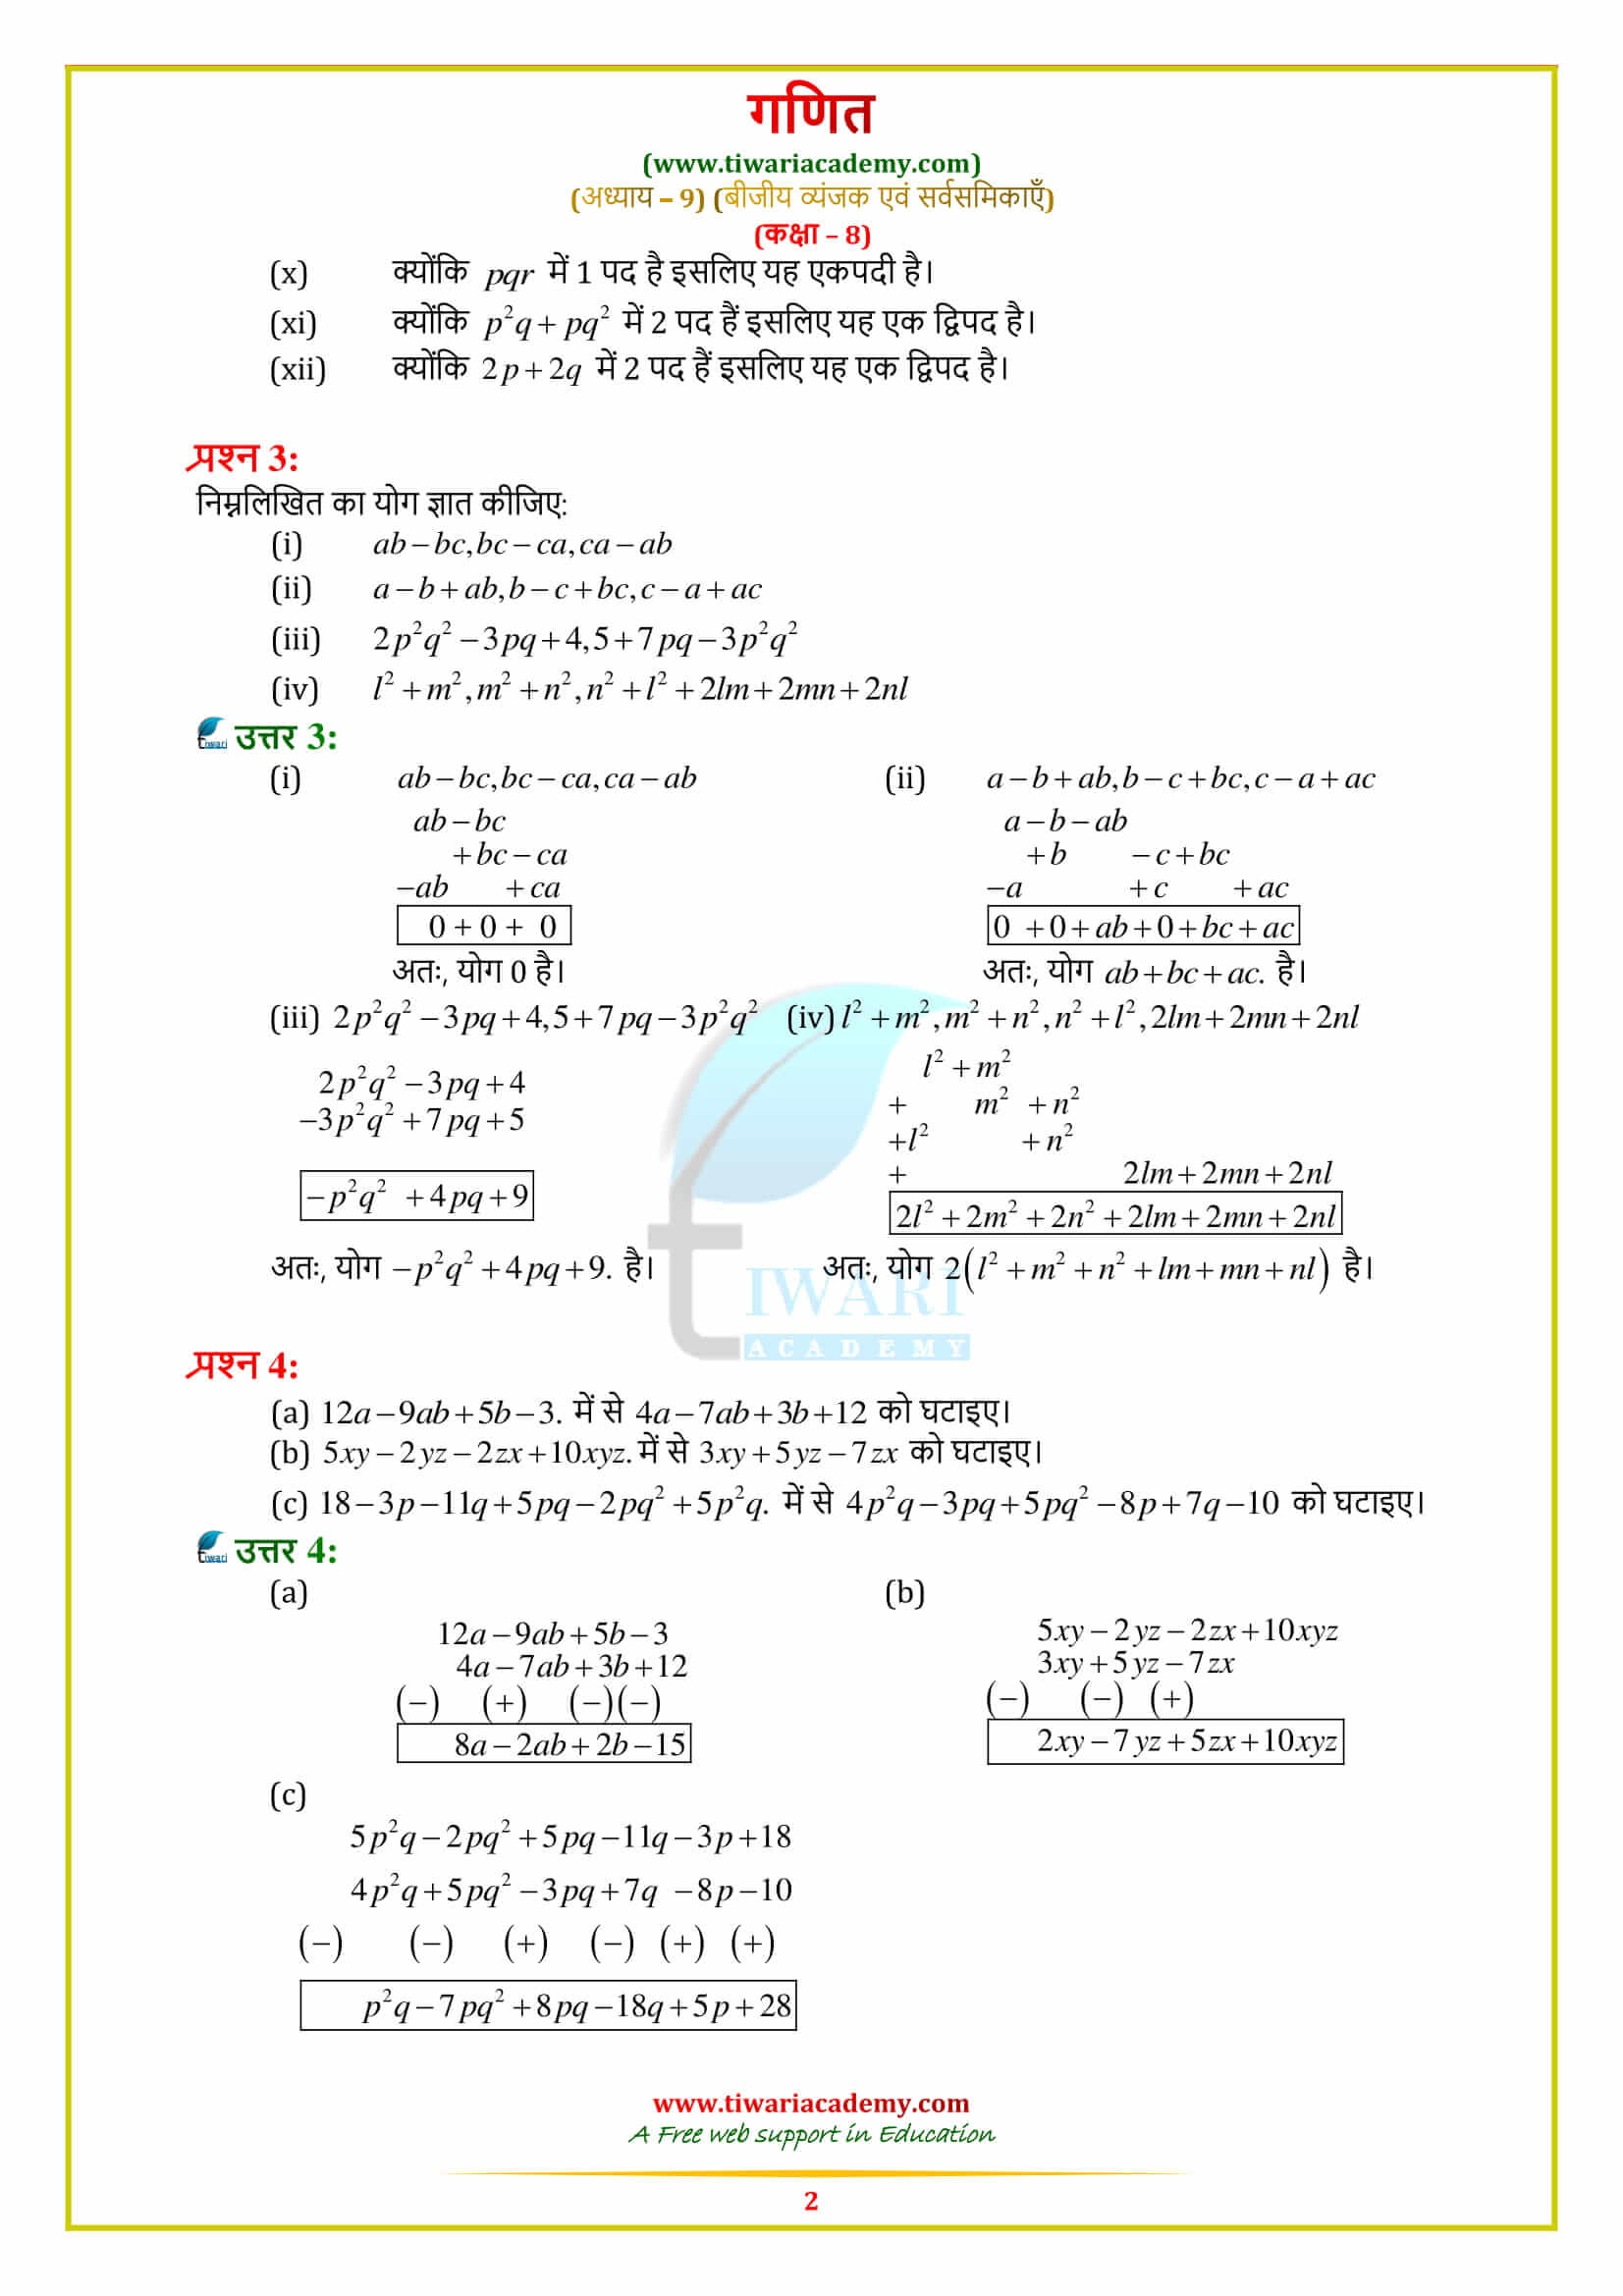 8 Maths Exercise 9.1 Solutions in hindi medium pdf